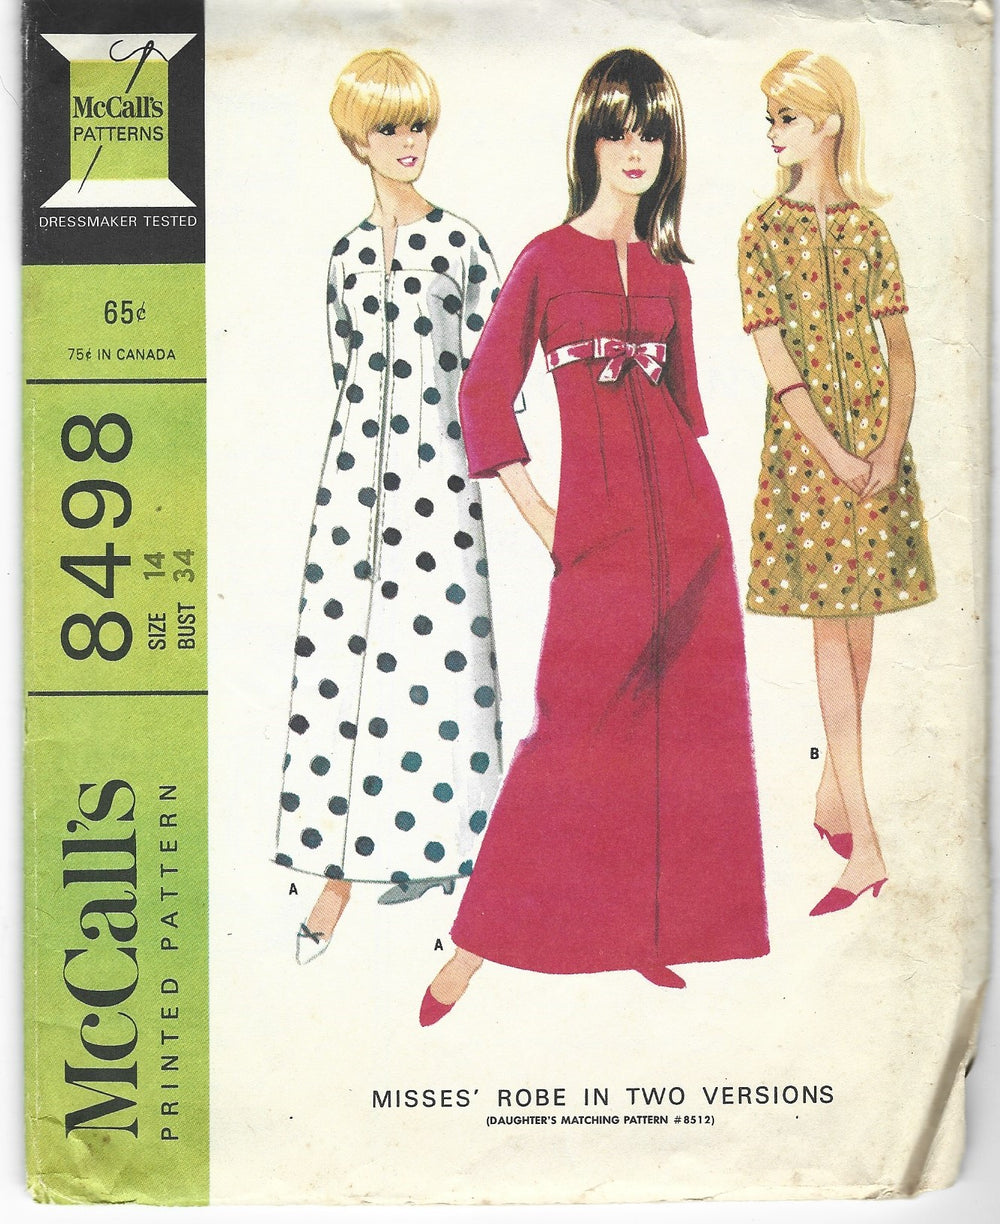 mccalls 8498 robe vintage pattern